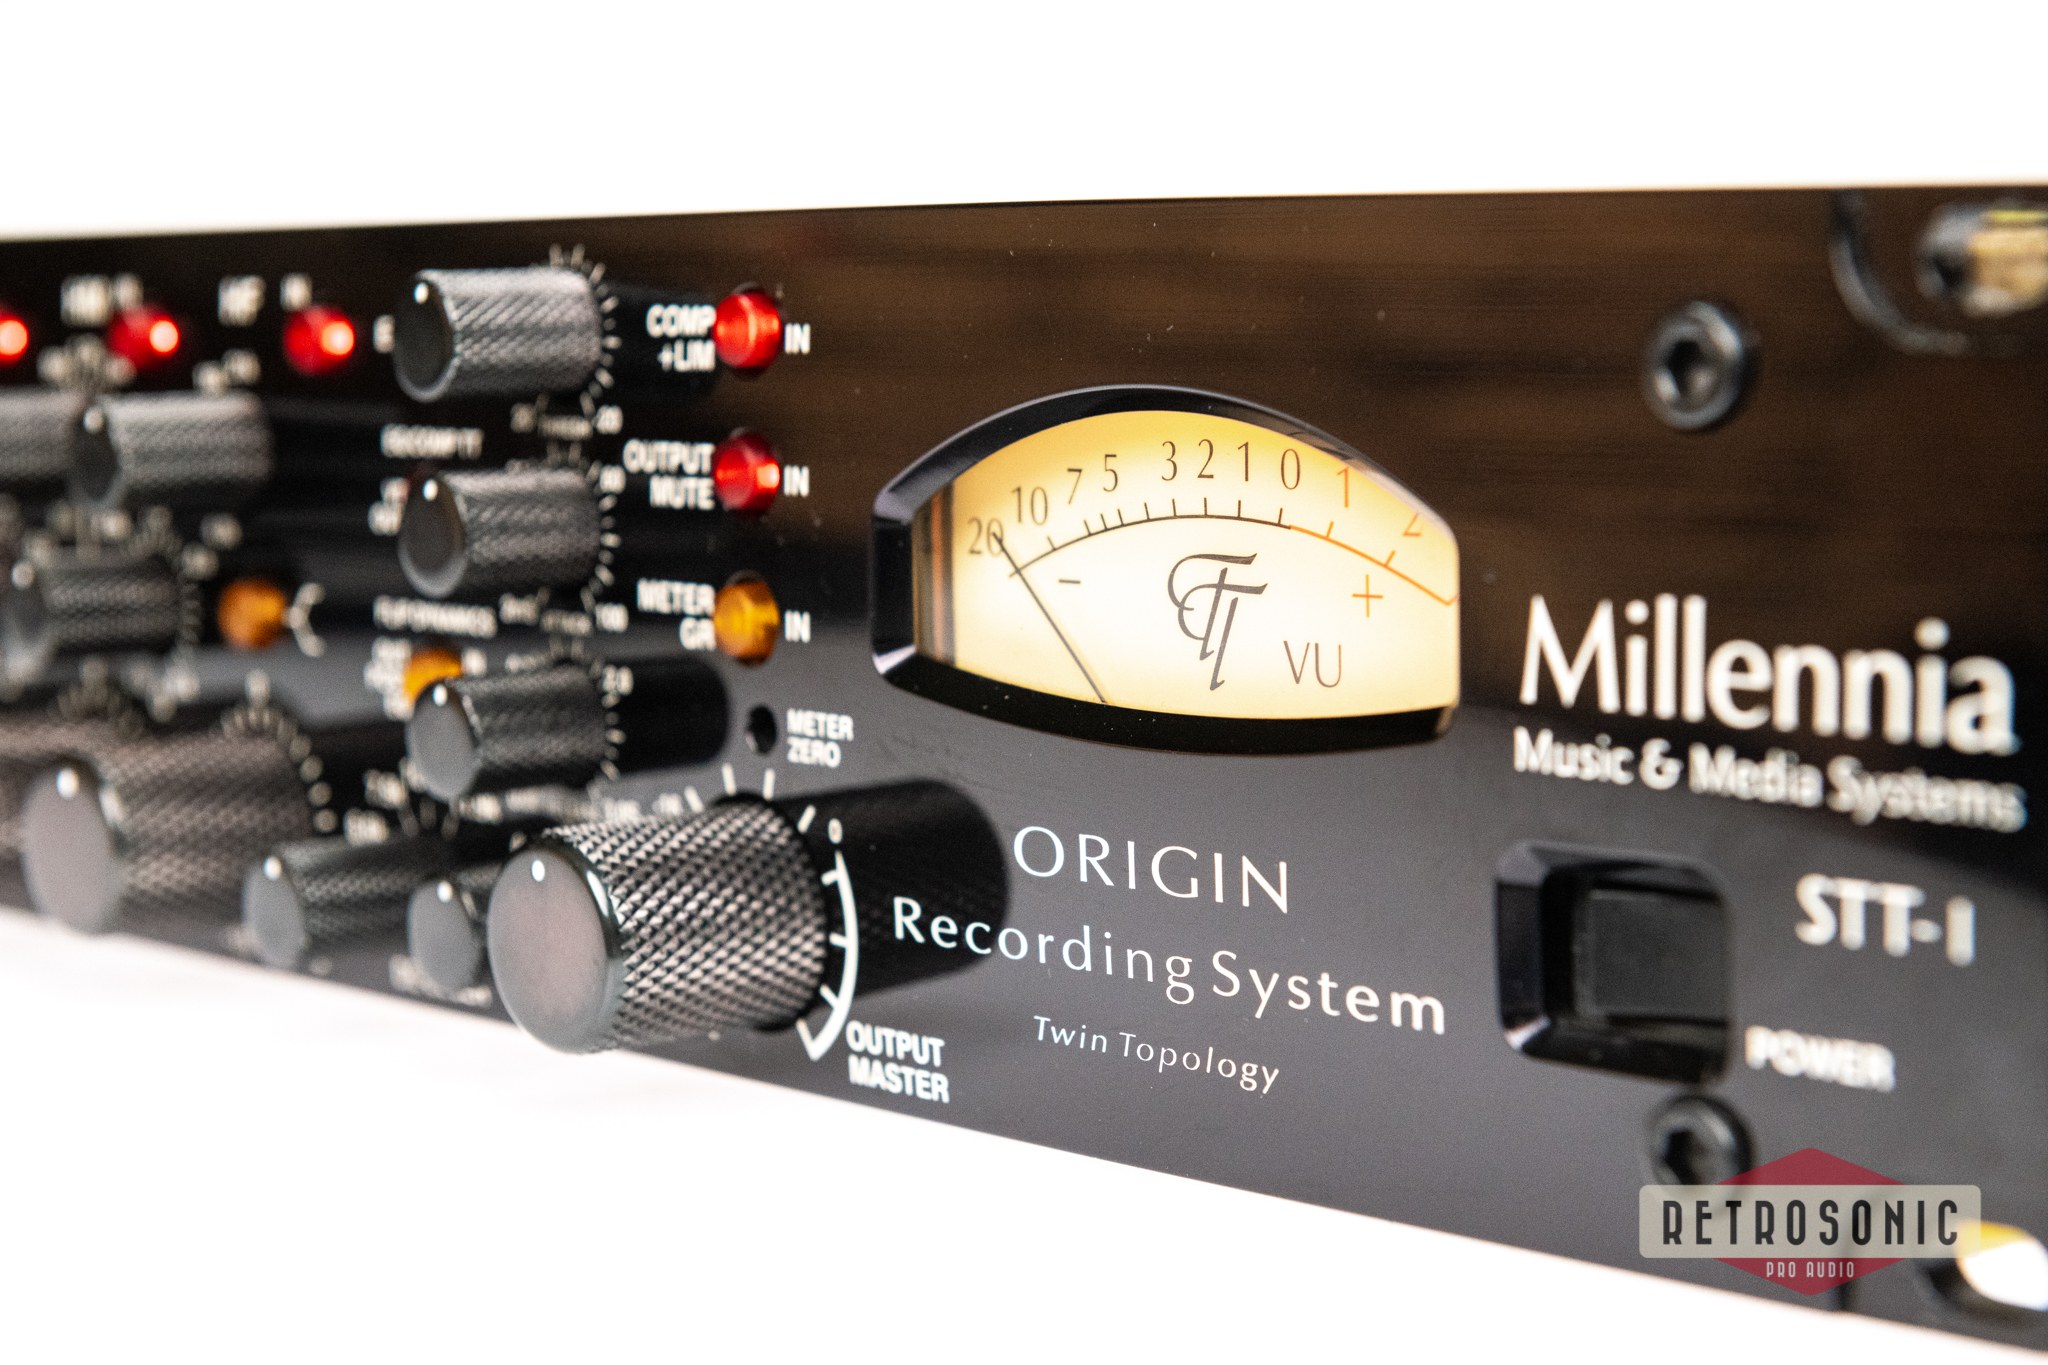 Millennia STT-1 Origin Tube/Solid State Recording Channel